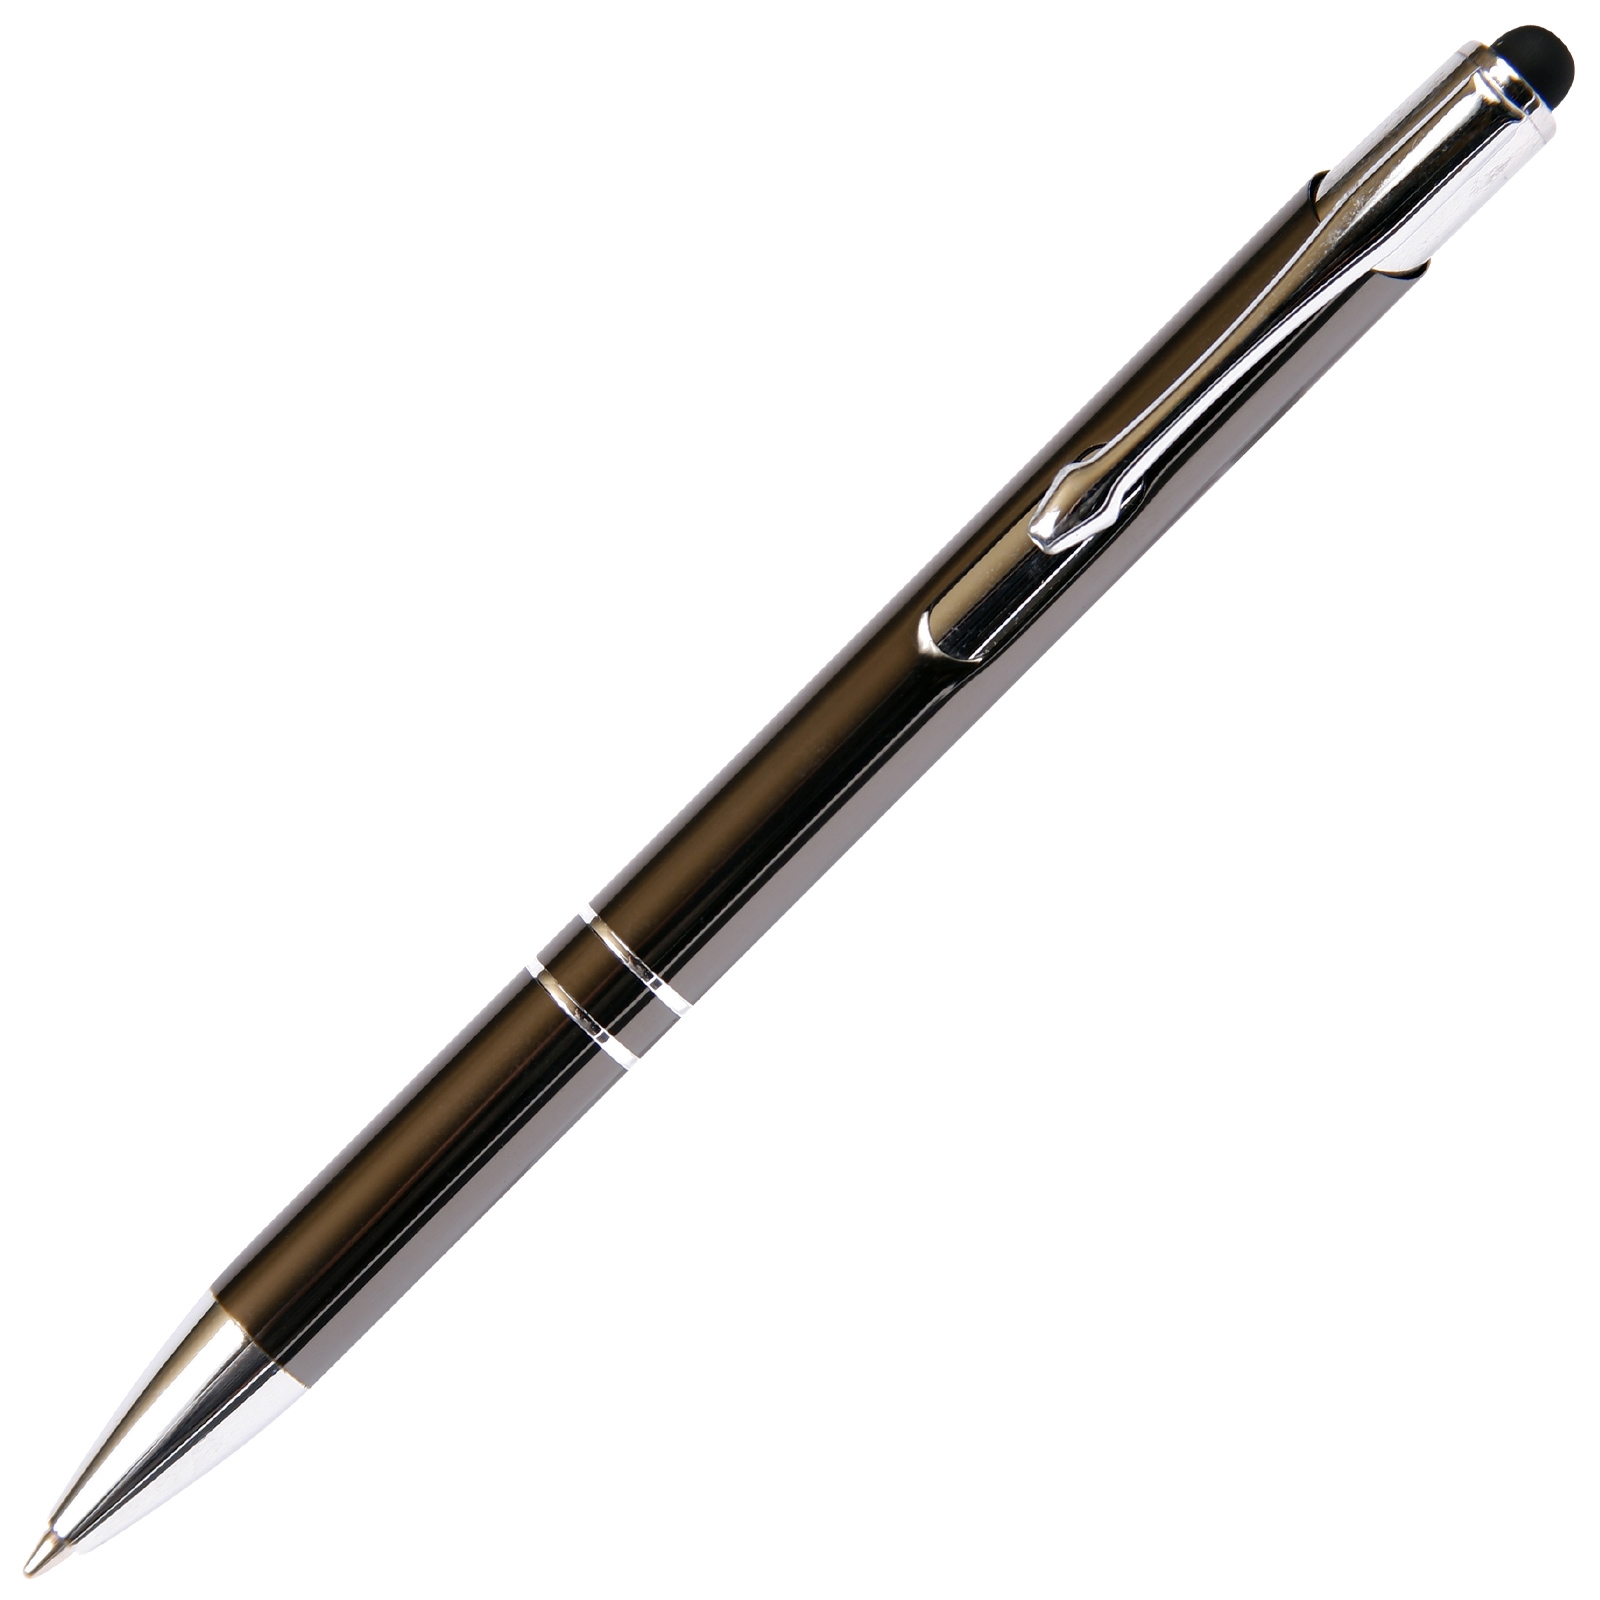 Budget Friendly Stylus JJ Ballpoint Pen - Gun Metal with Medium Tip Point By Lanier Pens